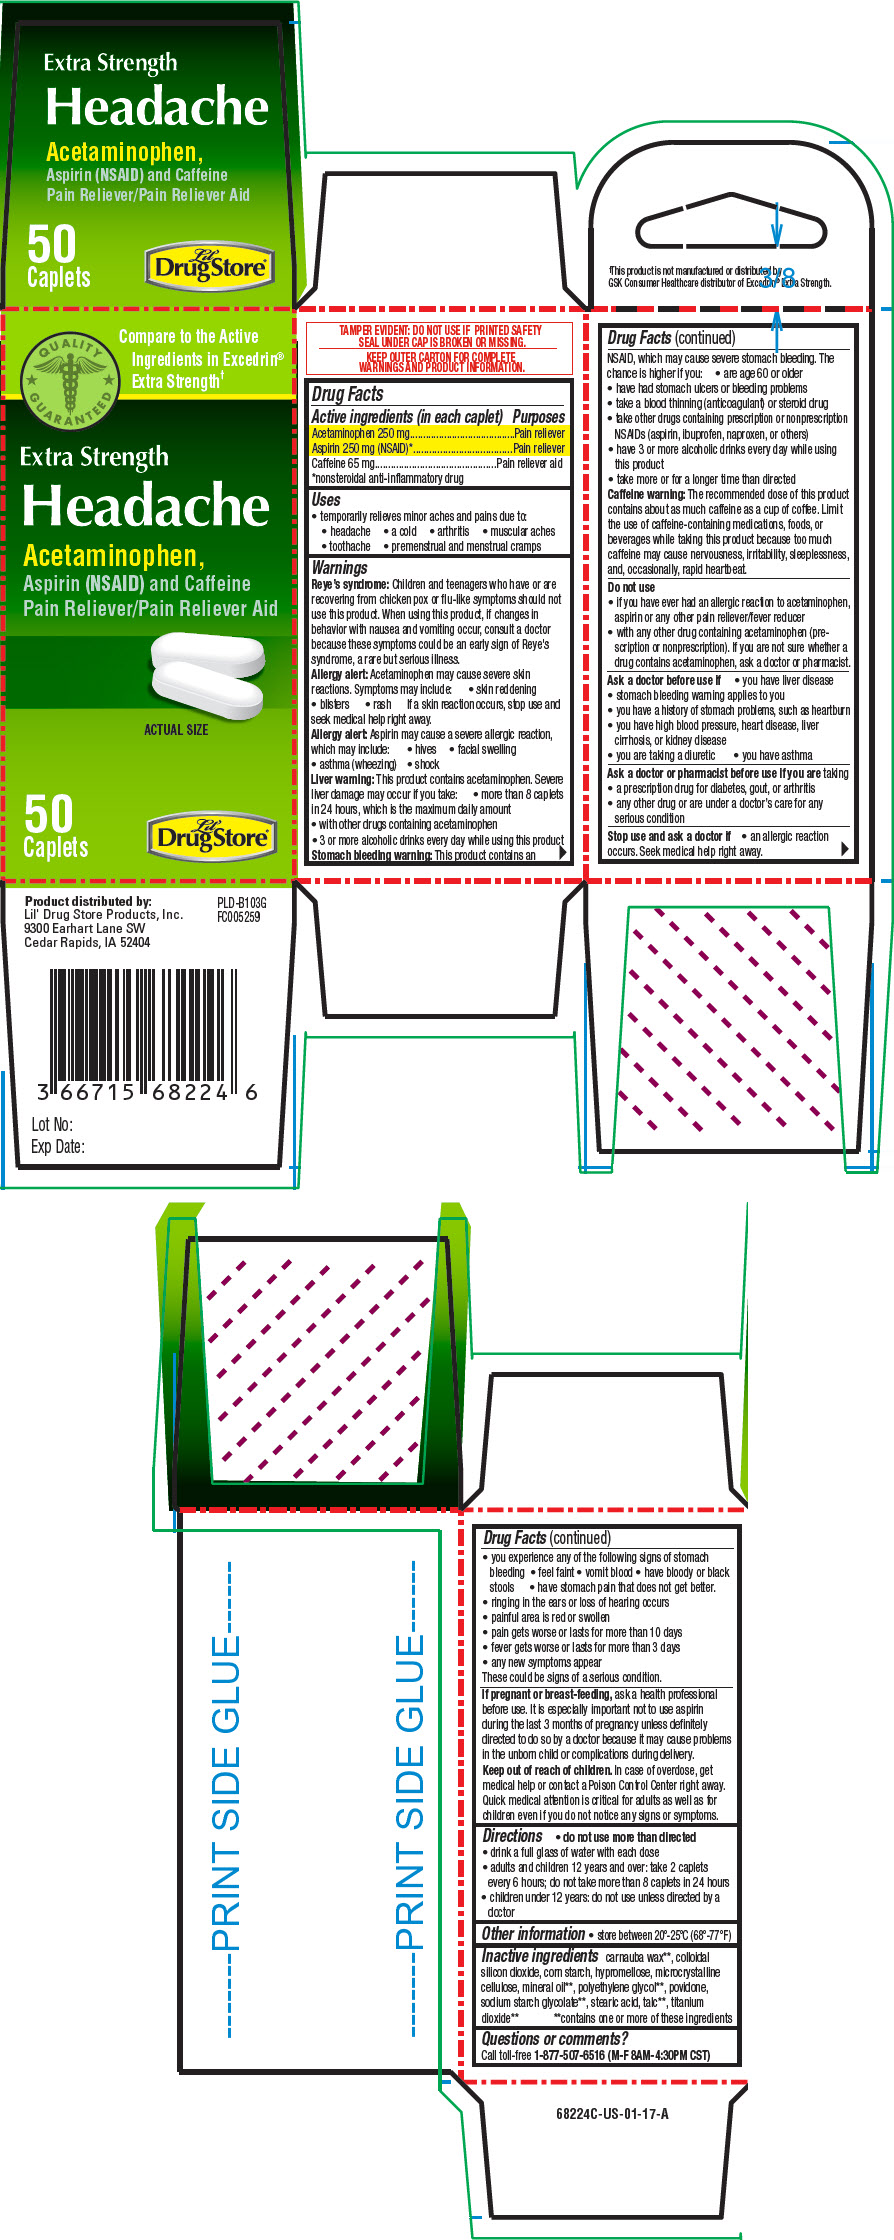 PRINCIPAL DISPLAY PANEL - 50 Caplet Bottle Carton - NDC 66715-5822